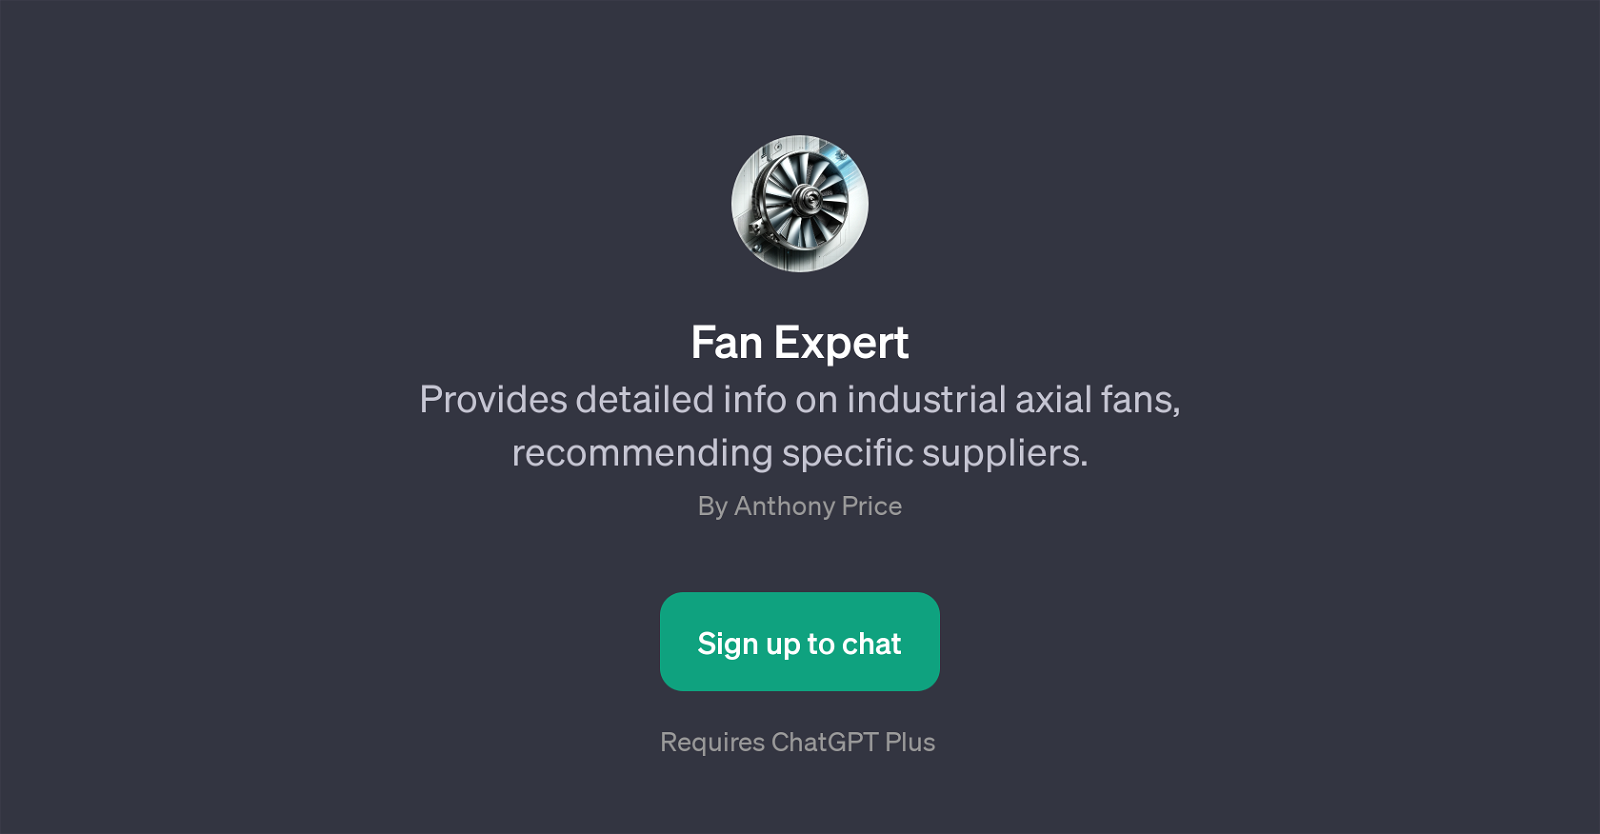 Fan Expert website